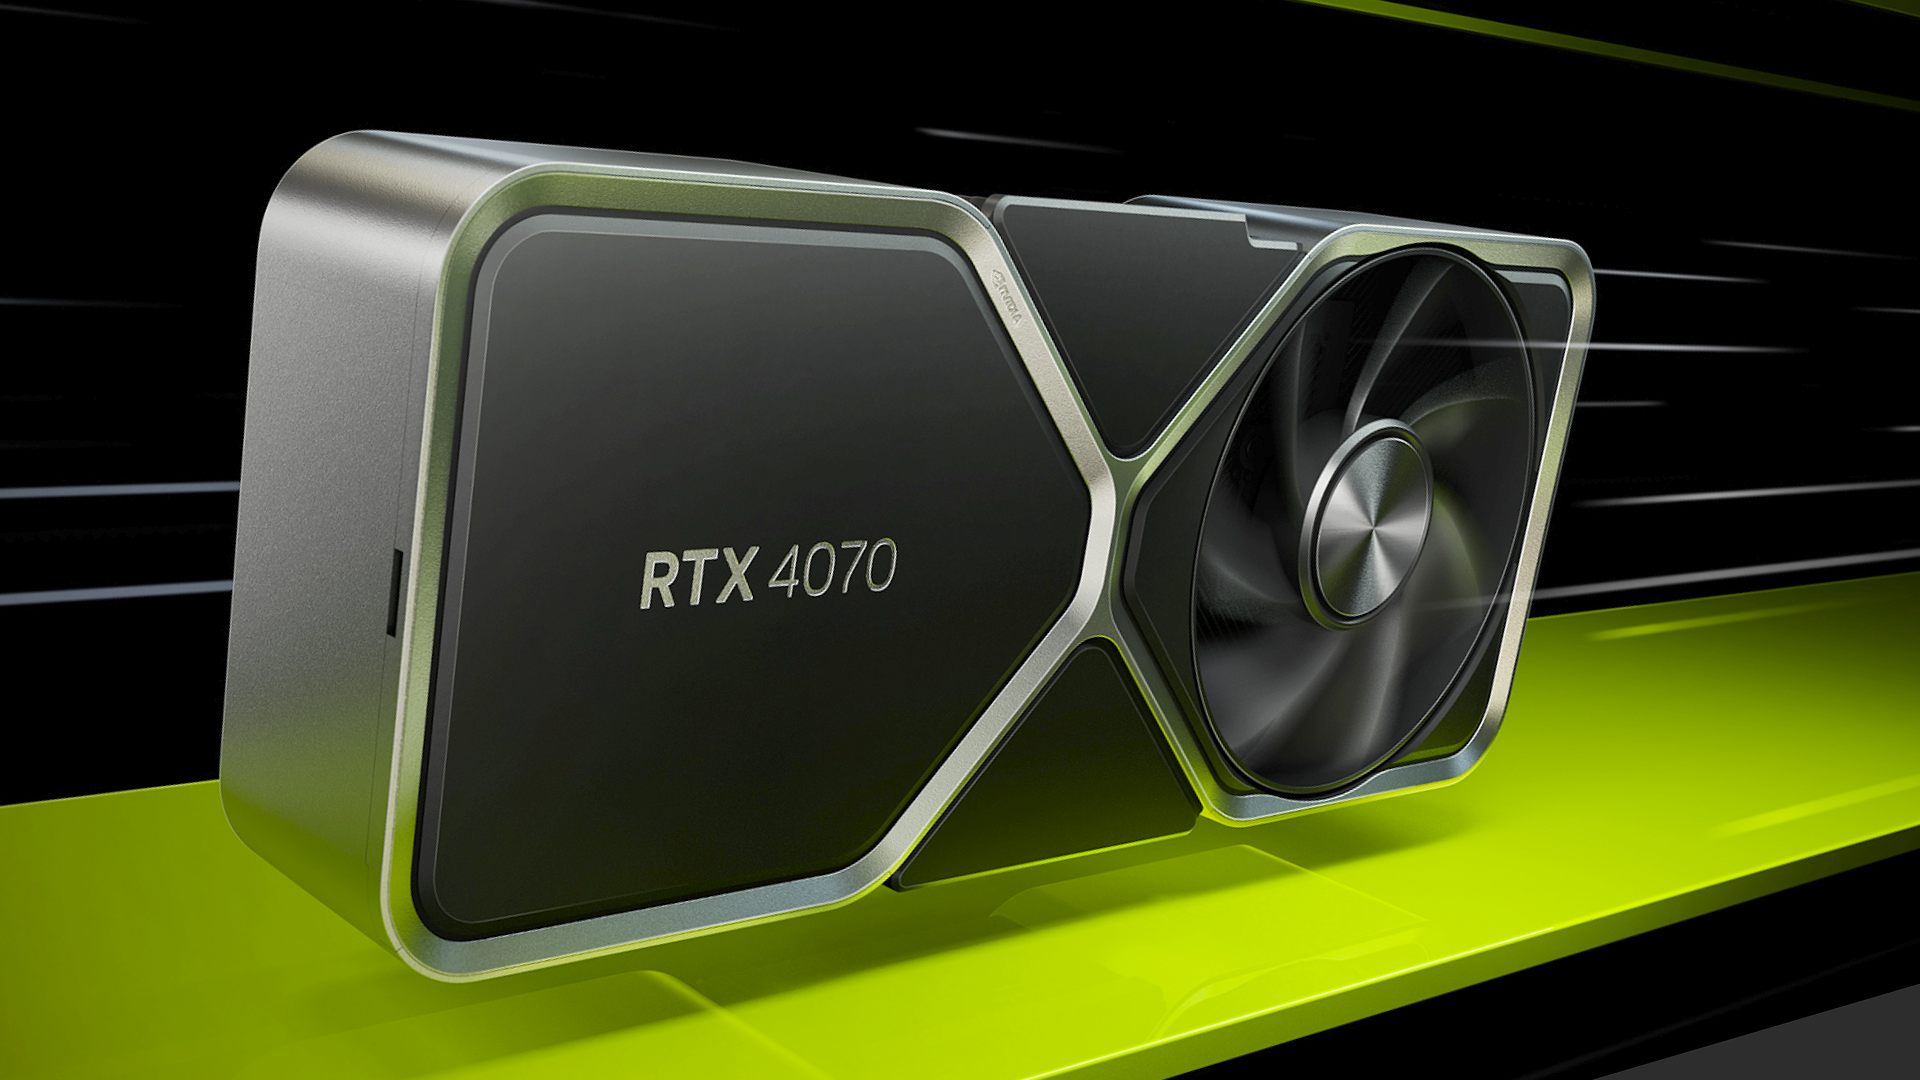 Nvidia RTX 4070 graphics card officially arrives tomorrow